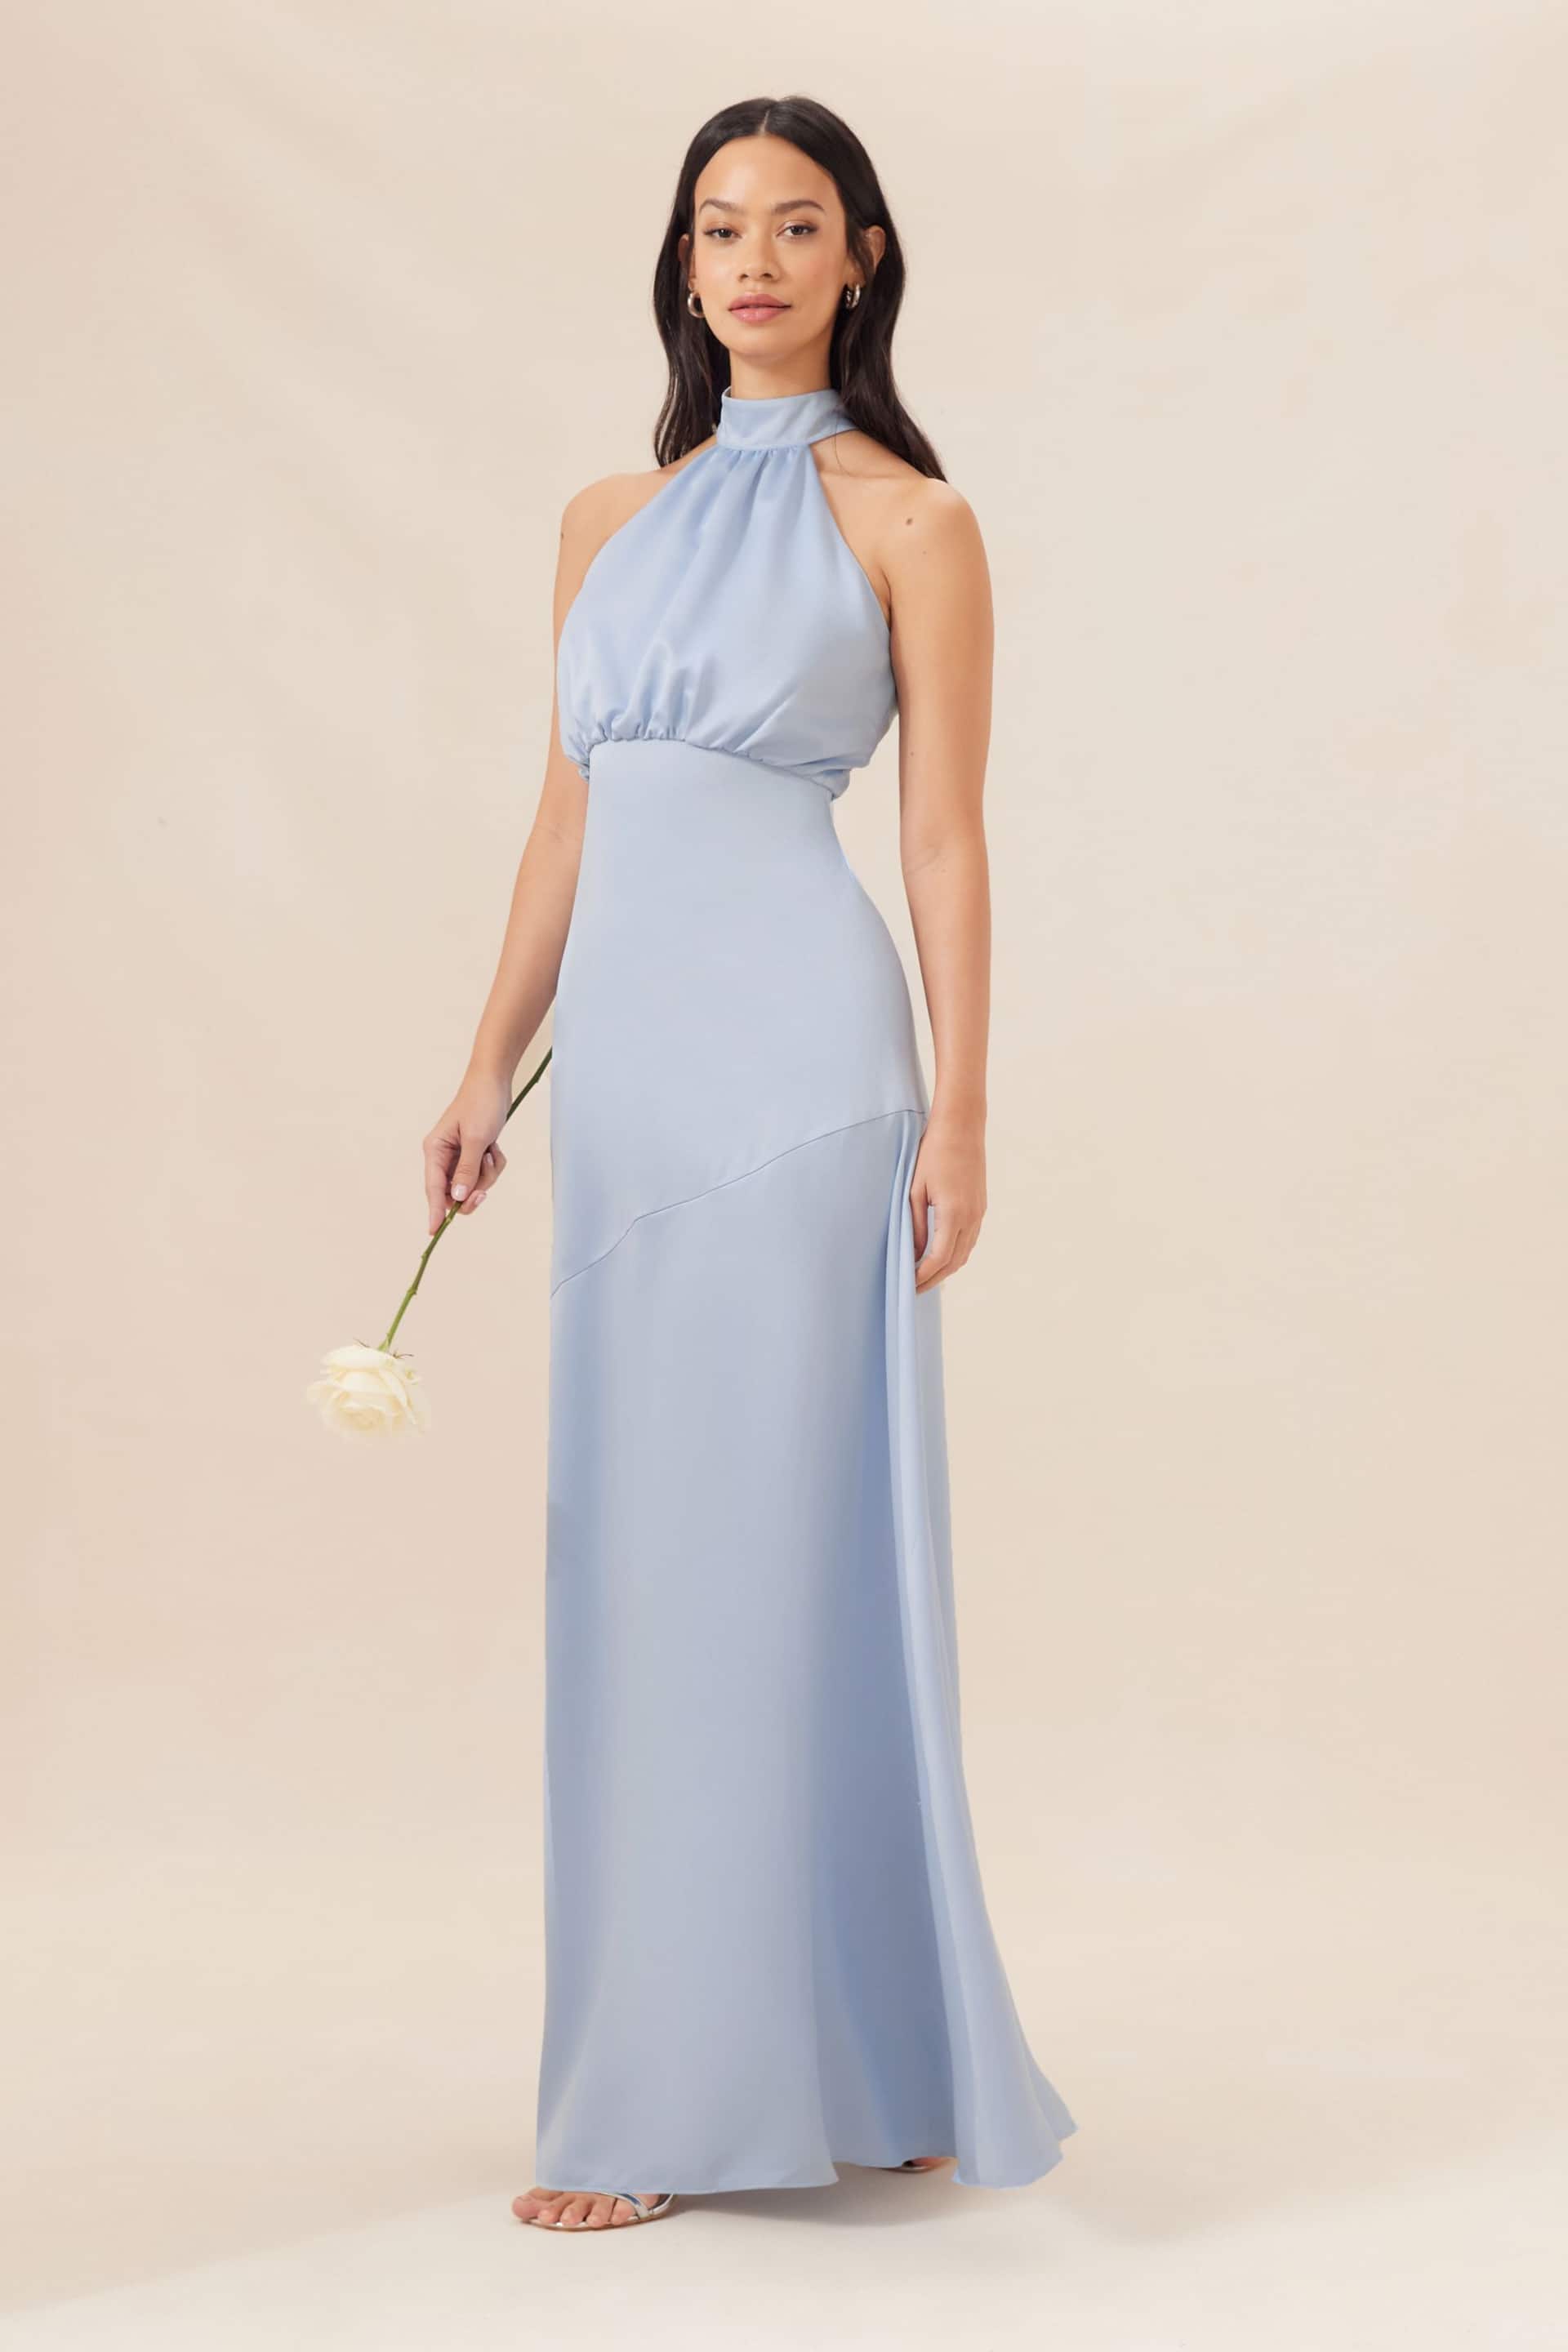 Lipsy Blue Halter Neck Empire Bridesmaid Satin Maxi Dress - Image 1 of 4